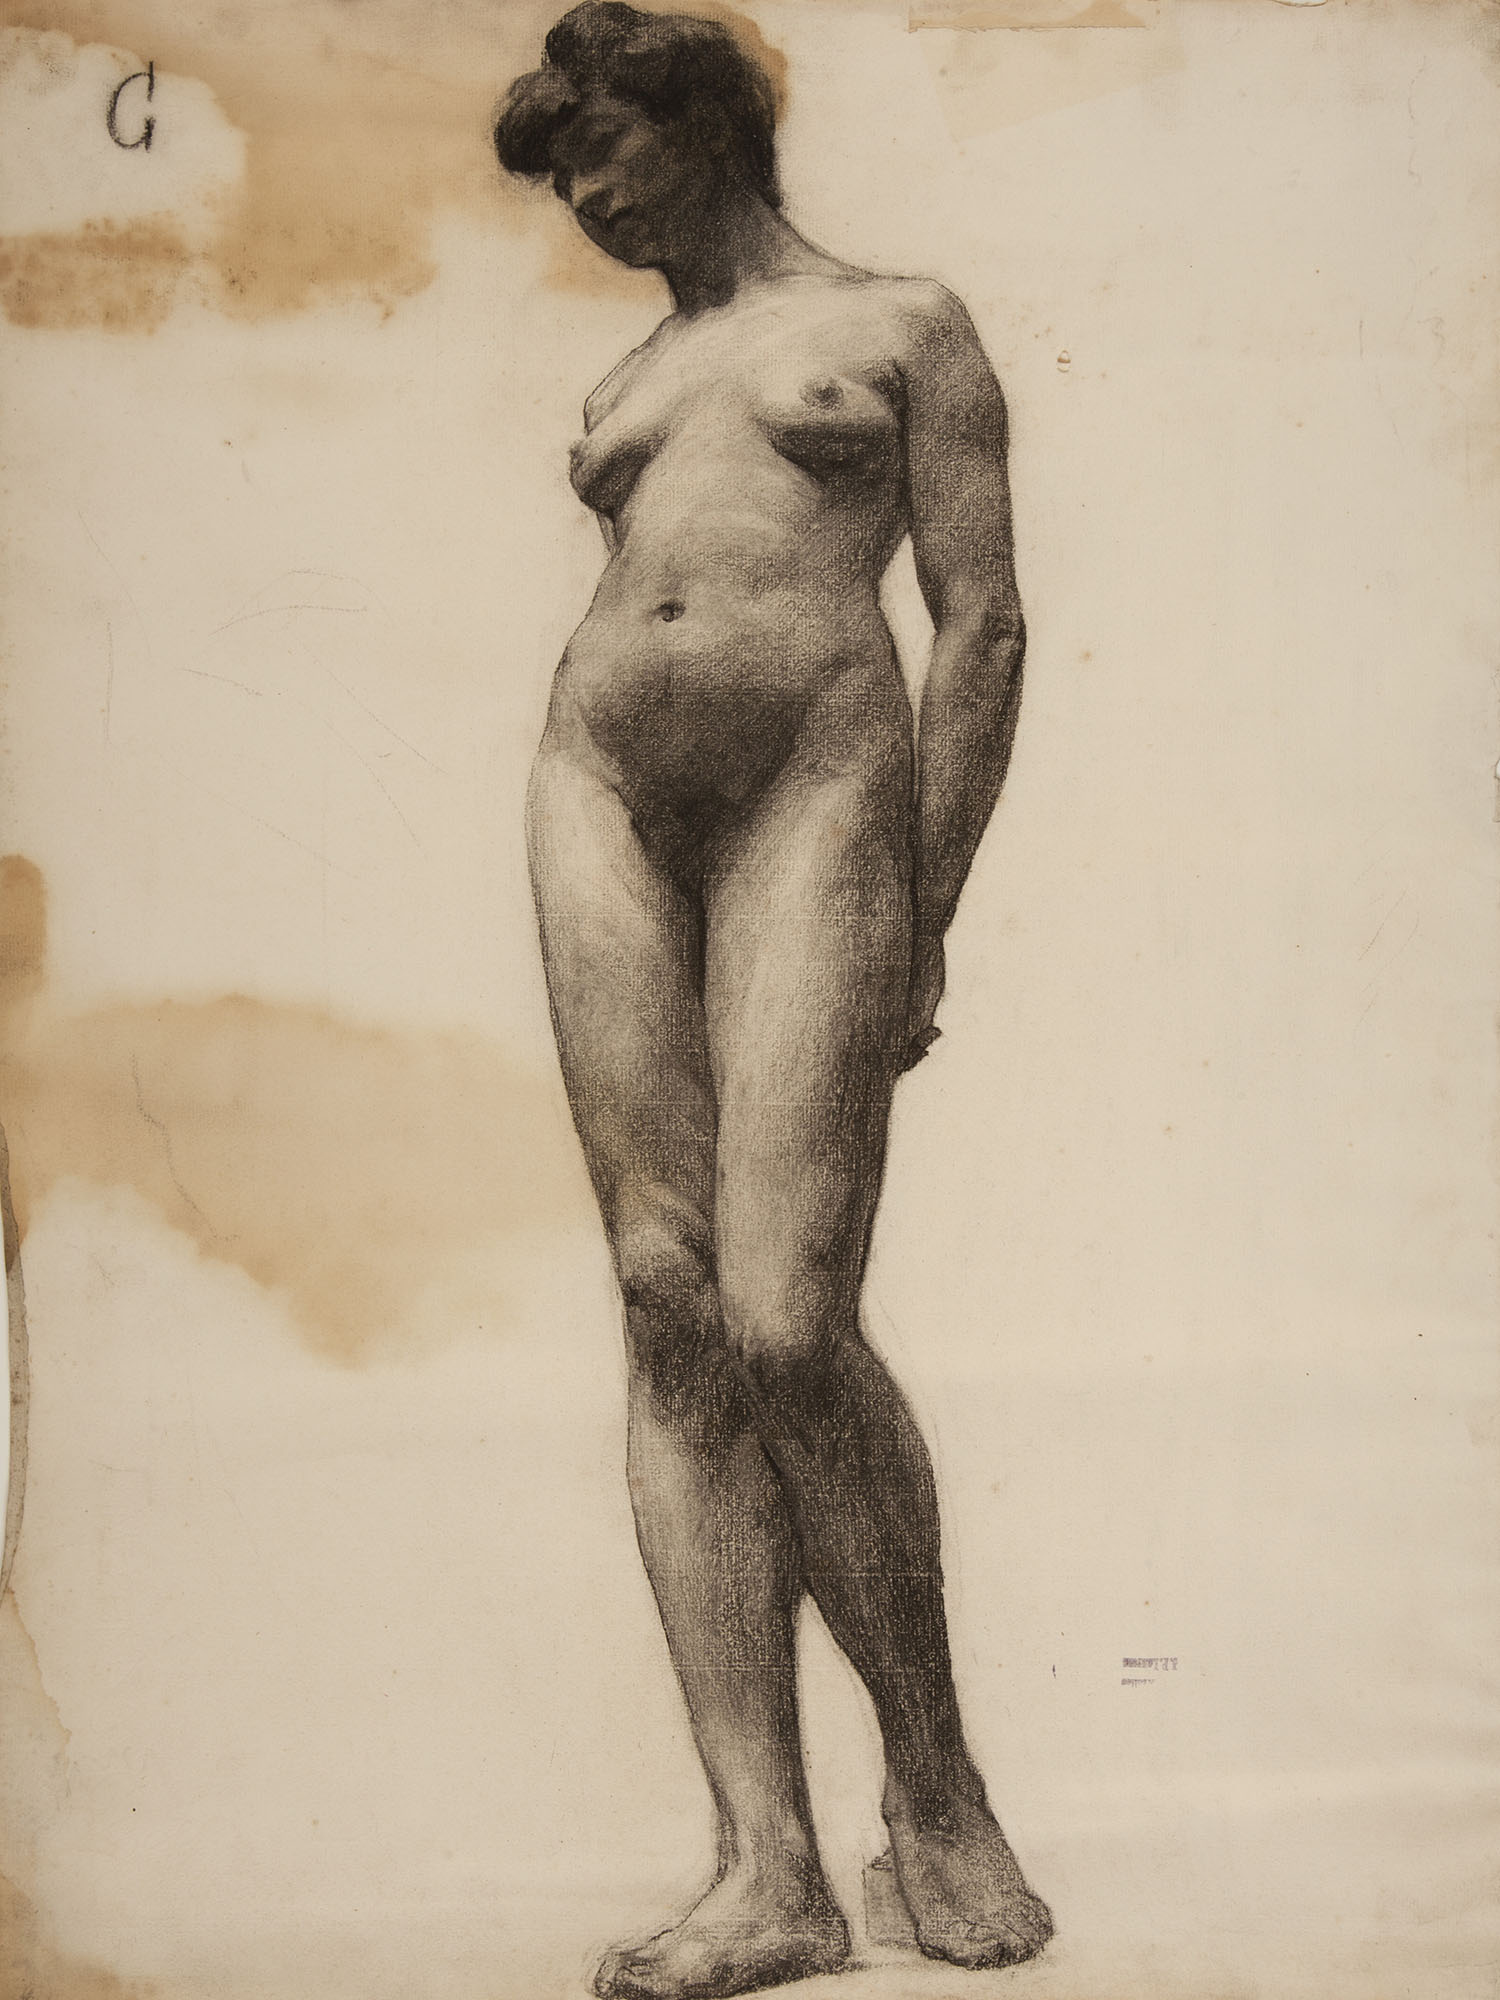 Albert Krehbiel, Untitled (Female Figure), early 20th century. Charcoal on paper. Collection of DePaul University, gift of Rebecca Krehbiel Ryan from the Krehbiel Estate, 2001.7